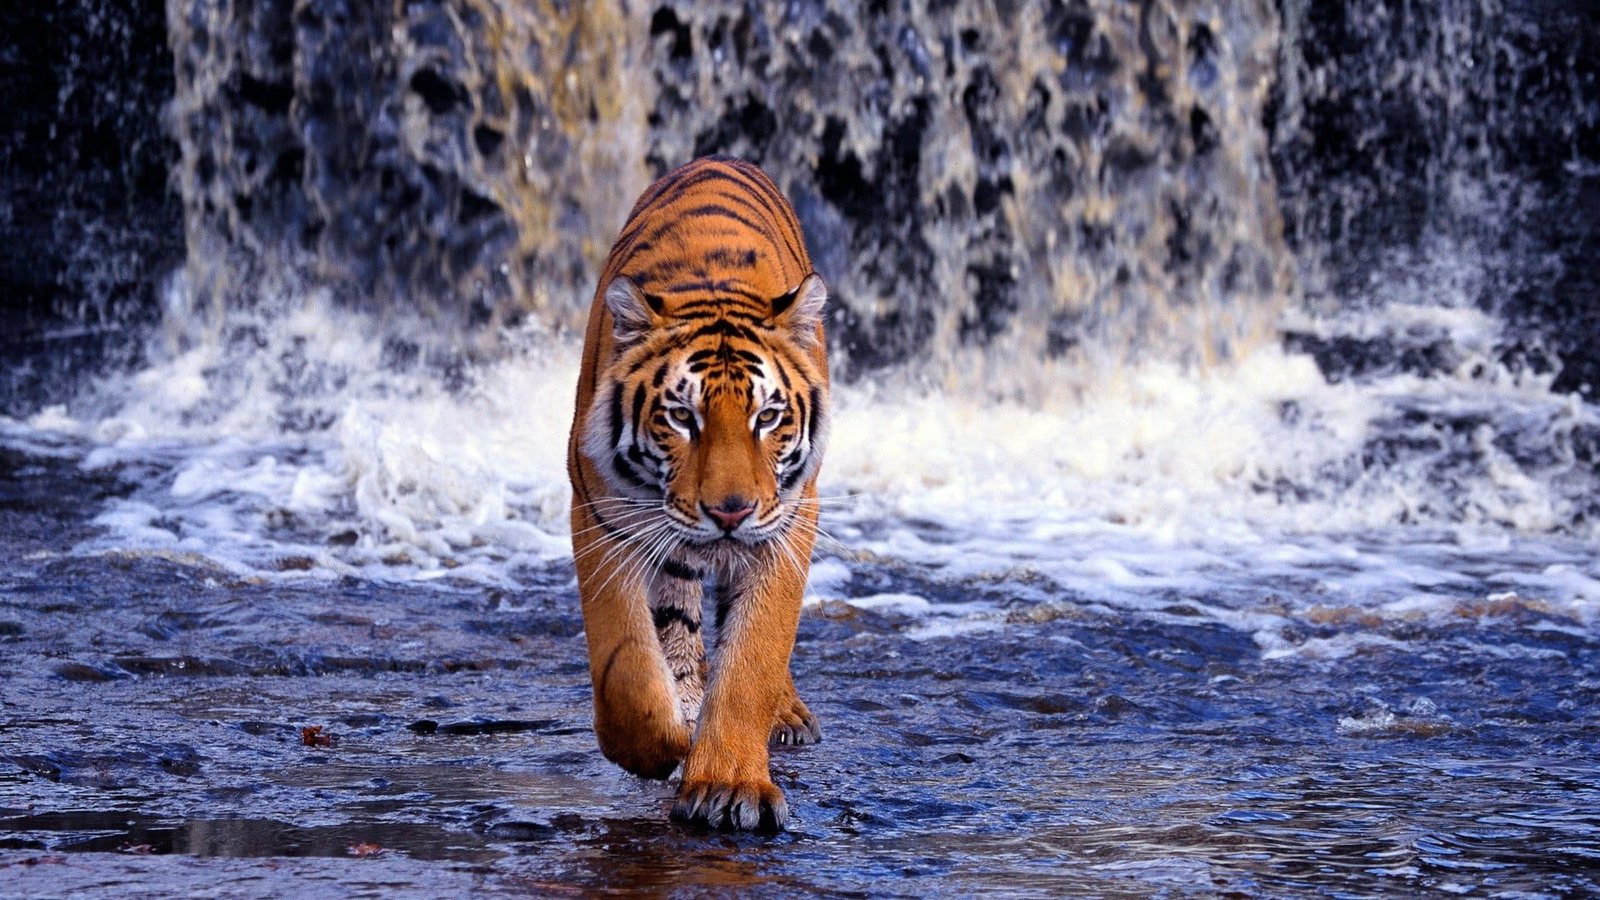 The Tiger Quiz- What makes this animal unique